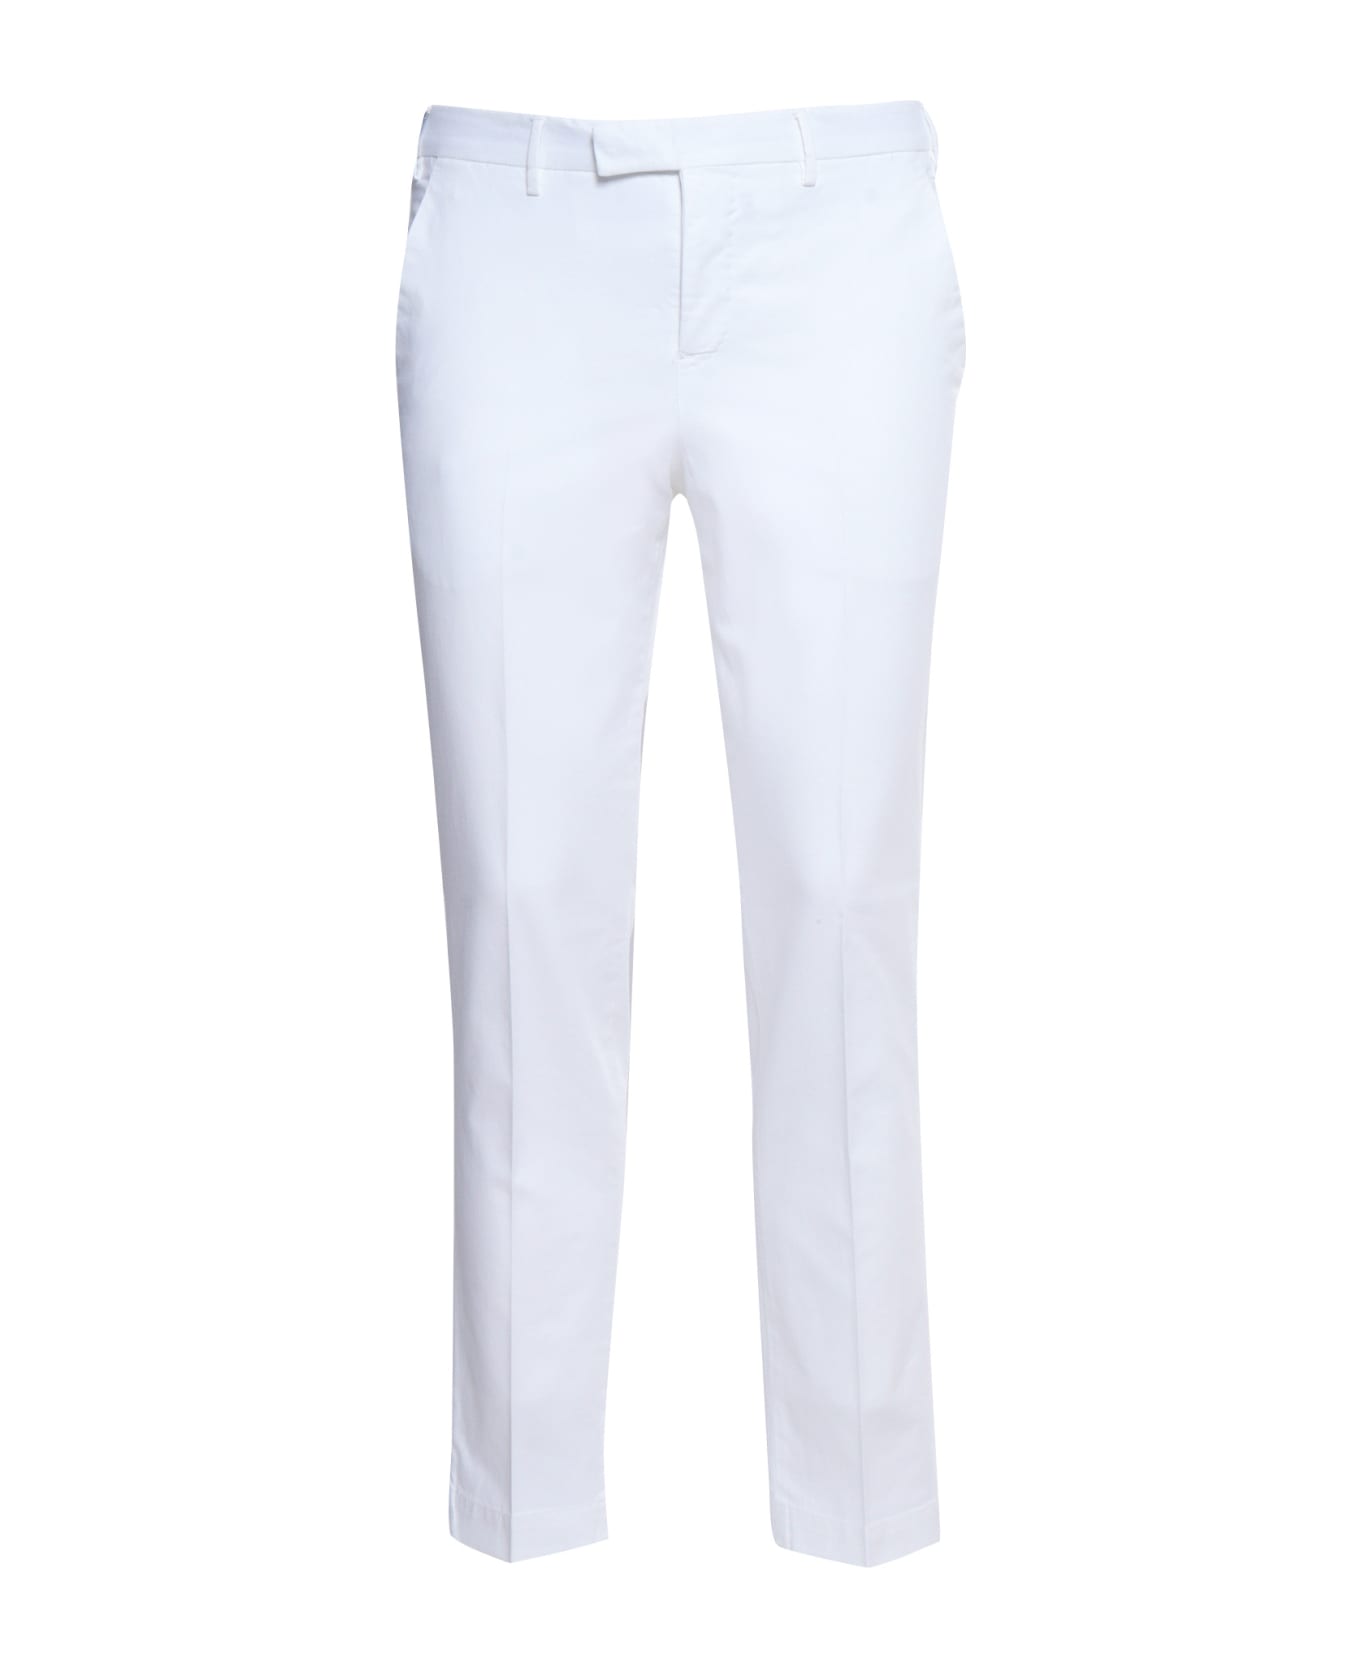 PT Torino White Master Trousers - WHITE ボトムス